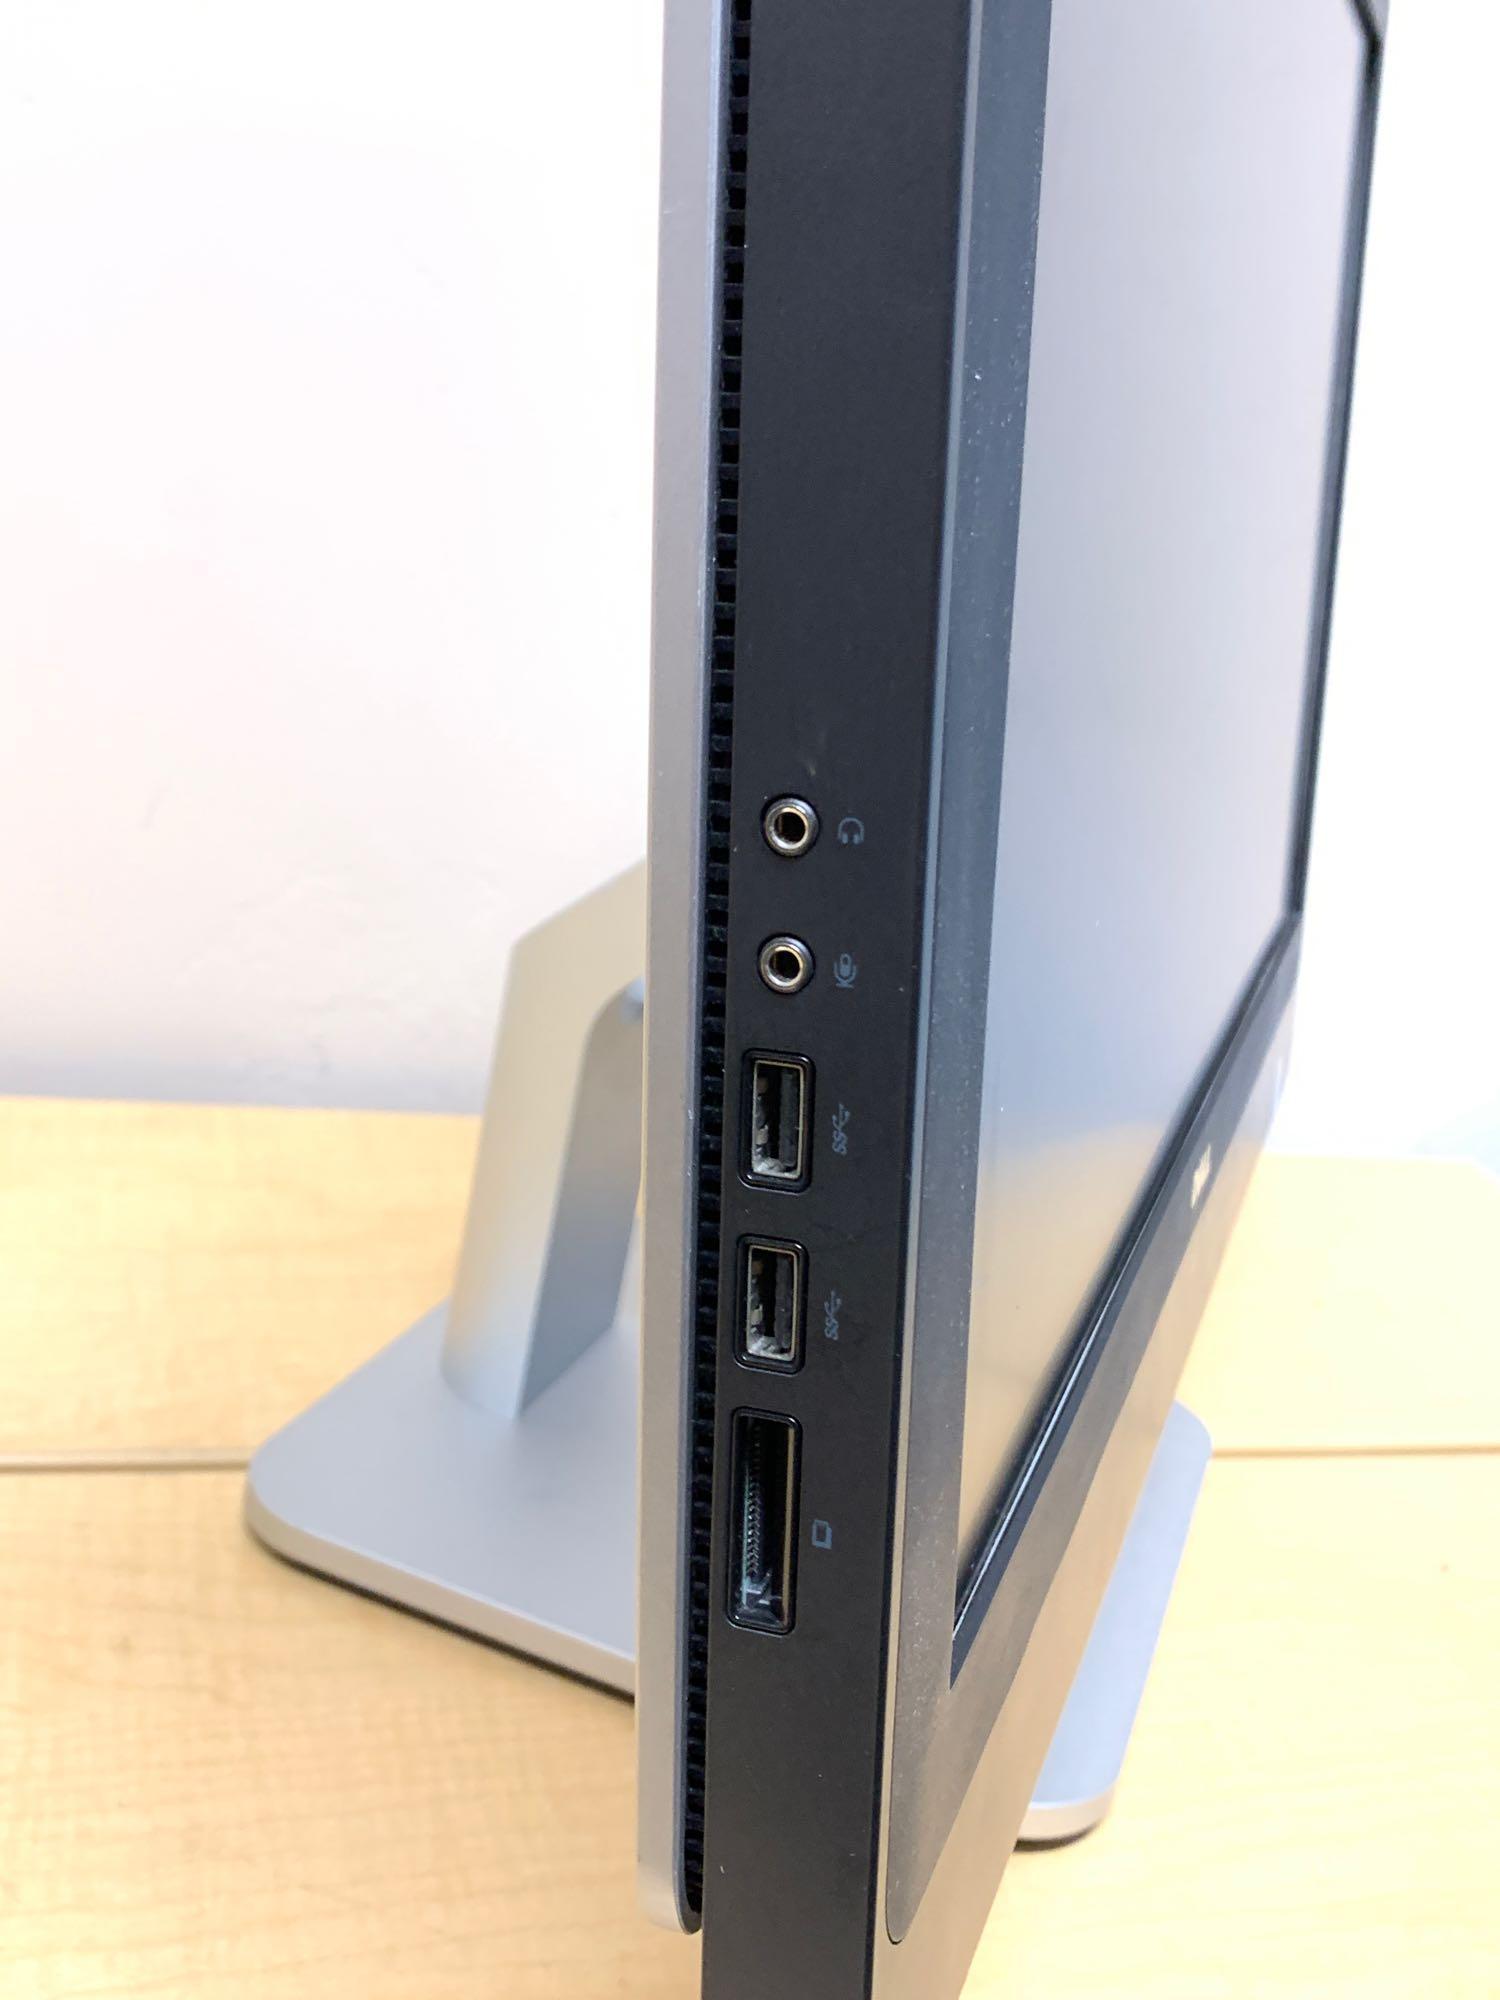 Dell Optiplex 9020 23" AIO Intel i5-4570 2.9GHz 8GB 500GB Win 10 Home Webcam Desktop Computer